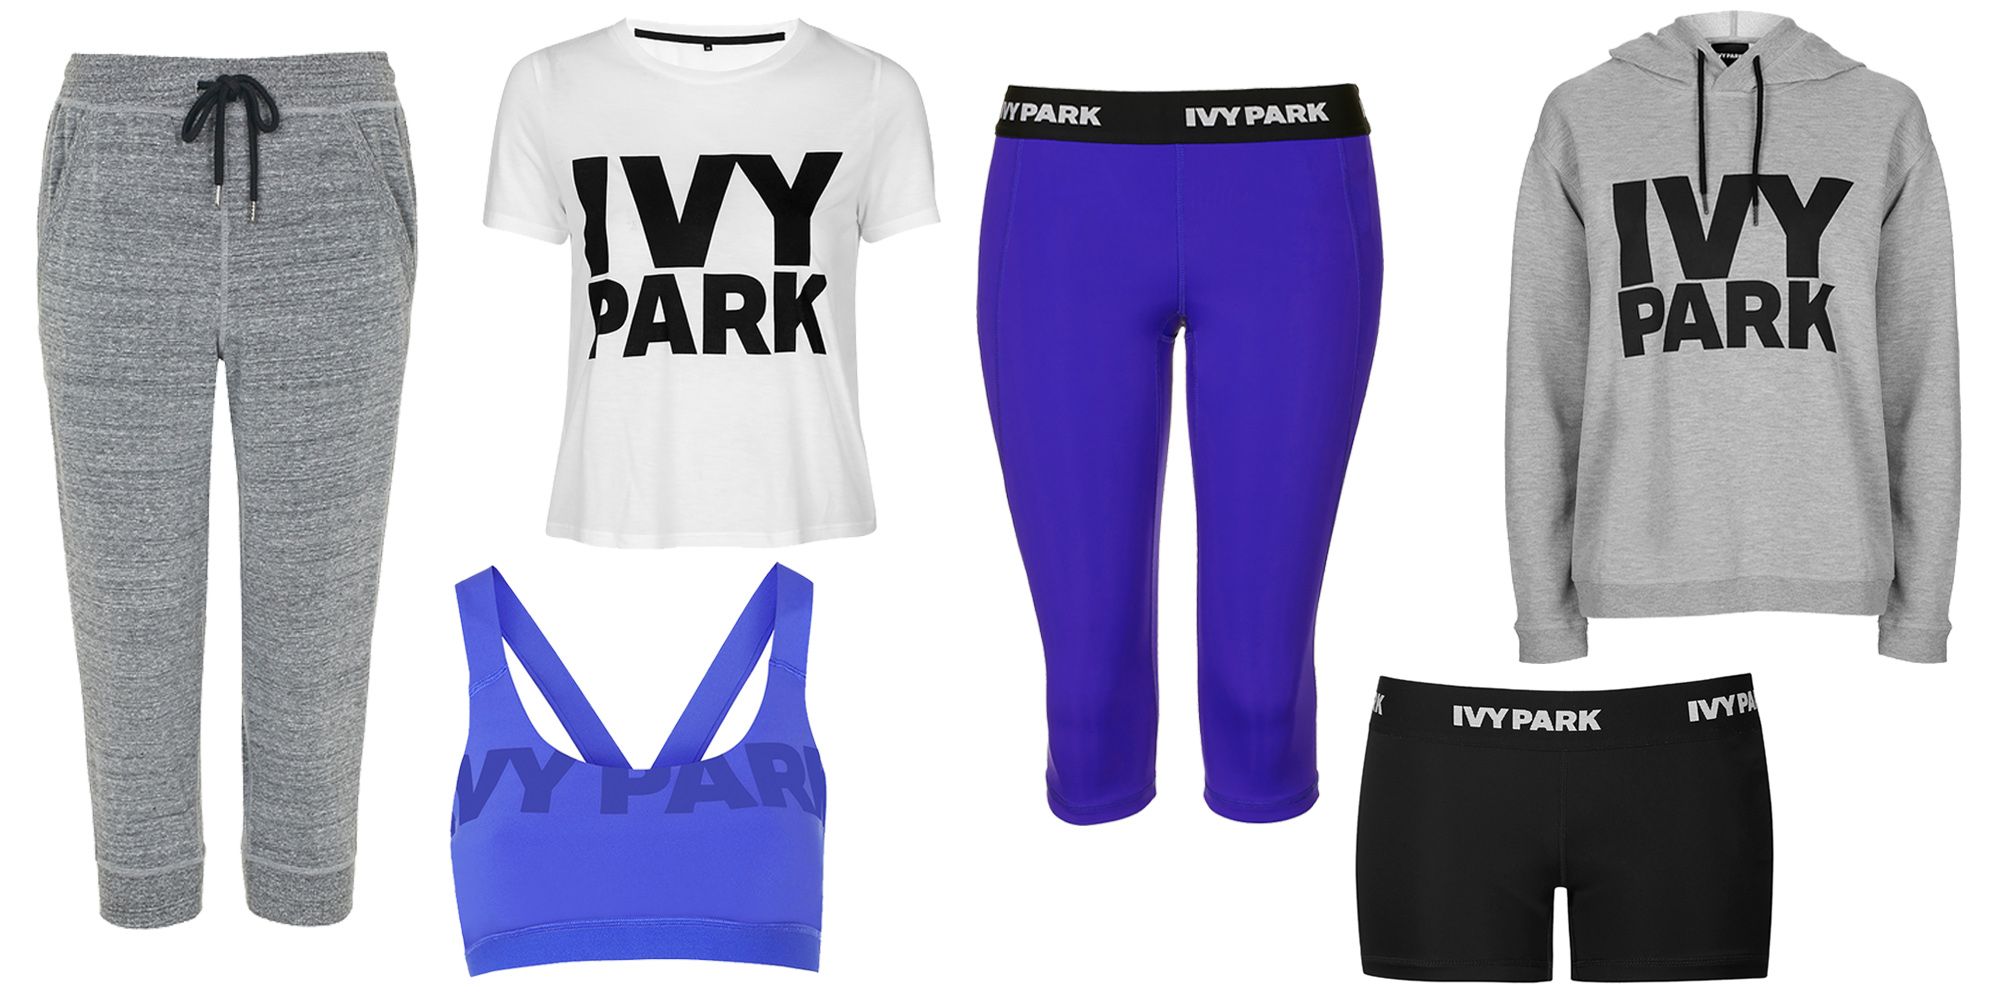 ivy park clothing